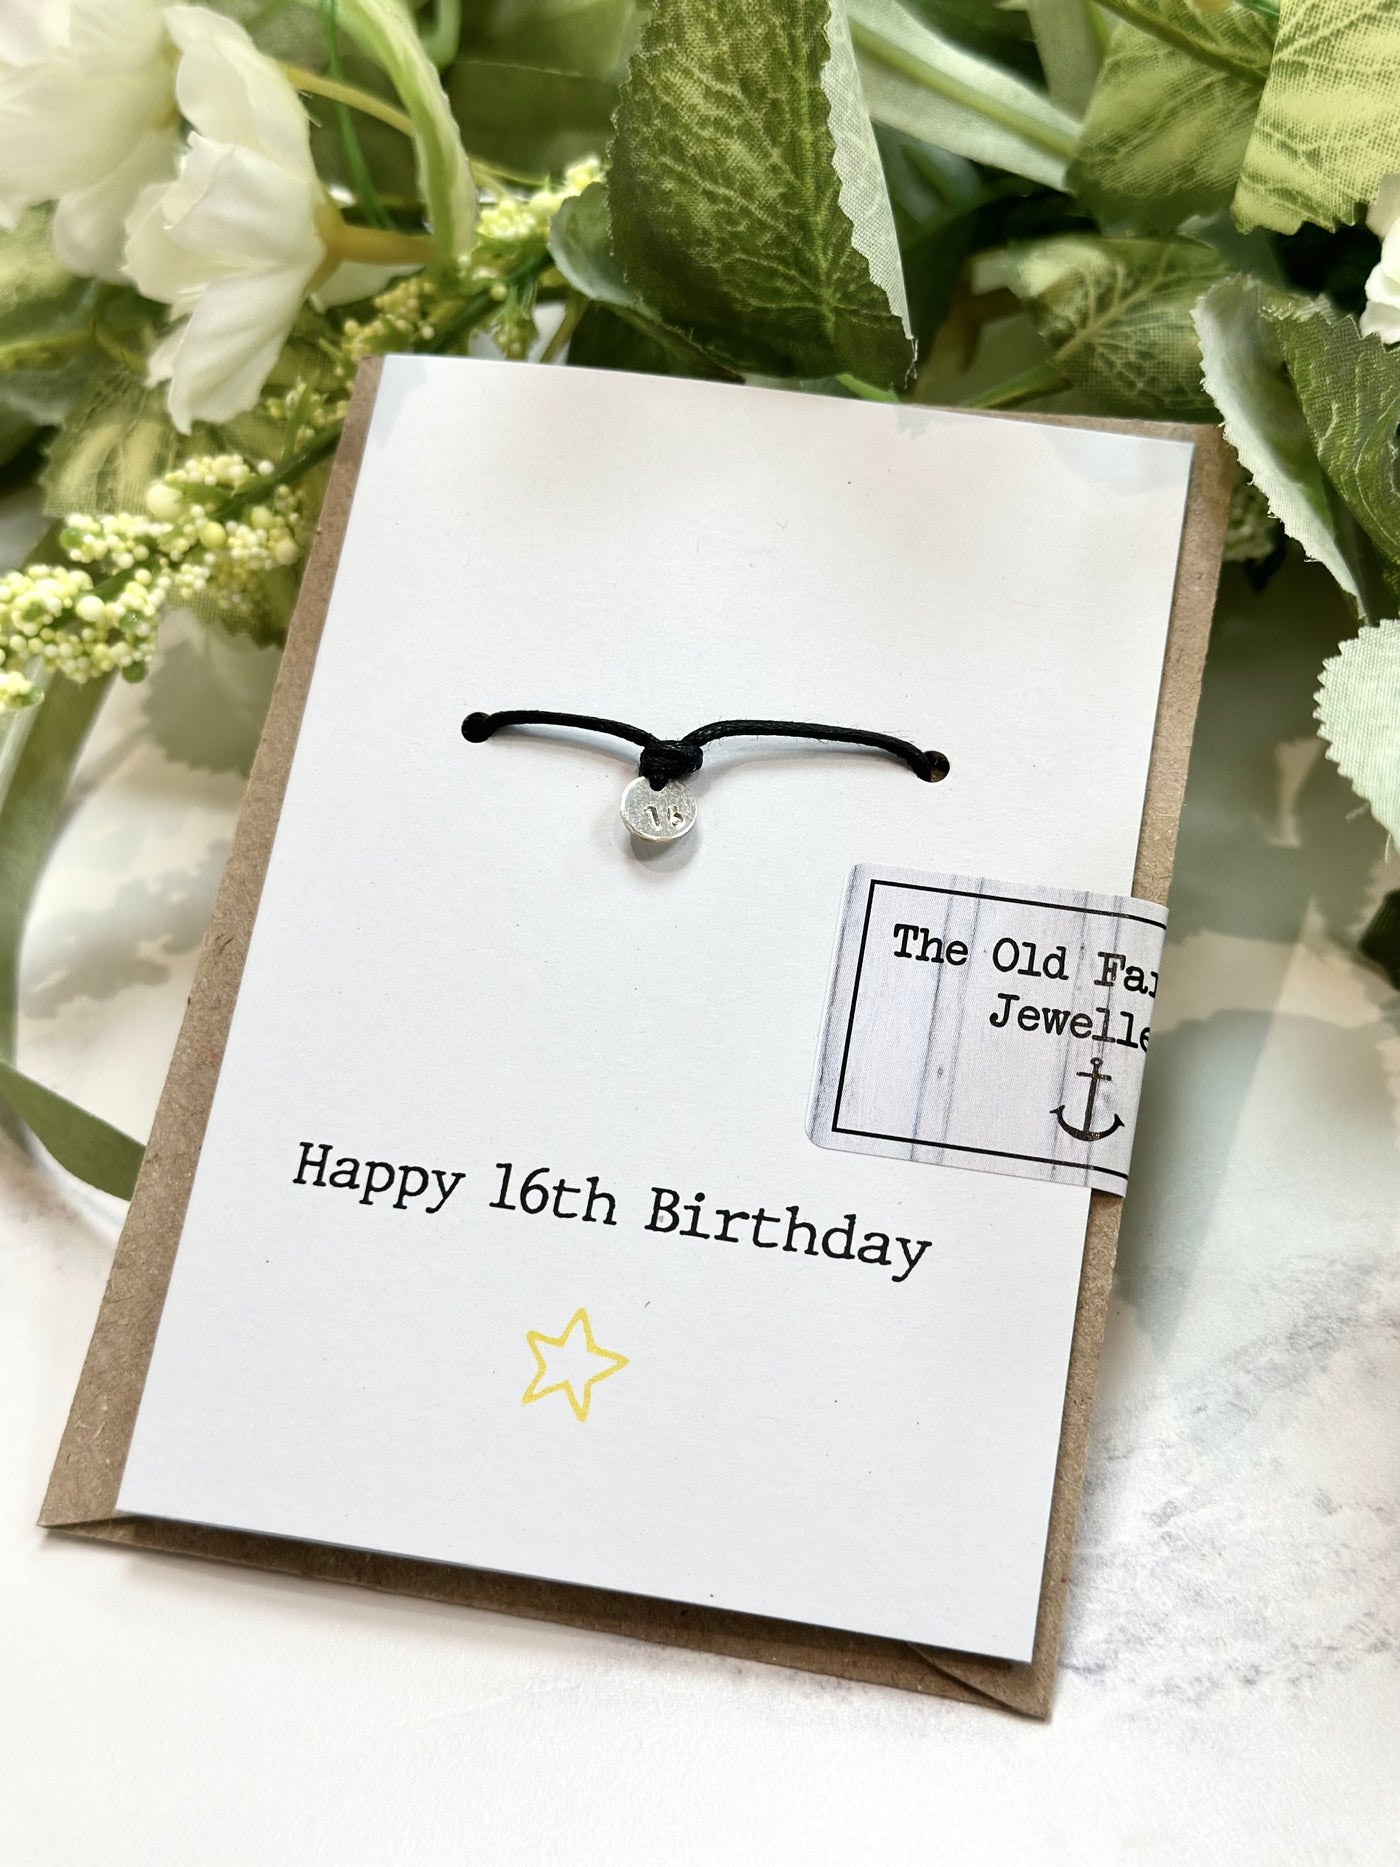 Happy 16th Birthday - 16 Stamped Disc Black Cord Wish Bracelet